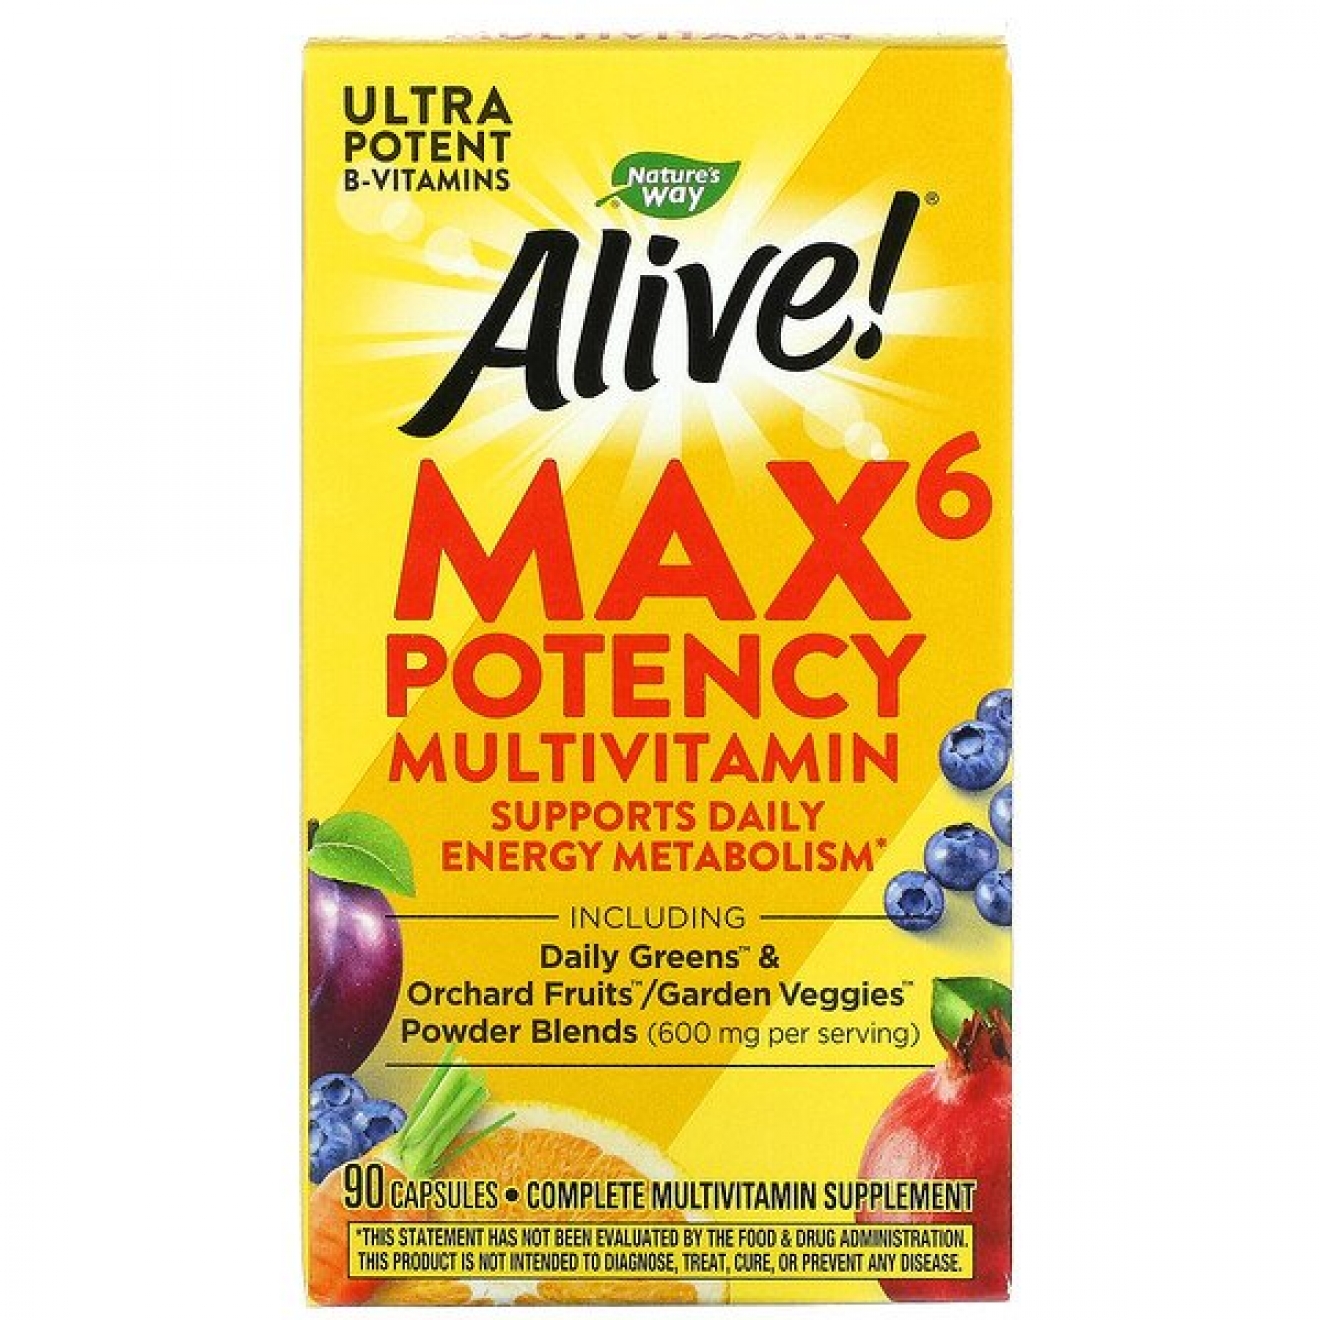 Multivitamine Natures Way, Alive! Max6 Potency Multivitamin, 90 Capsules 